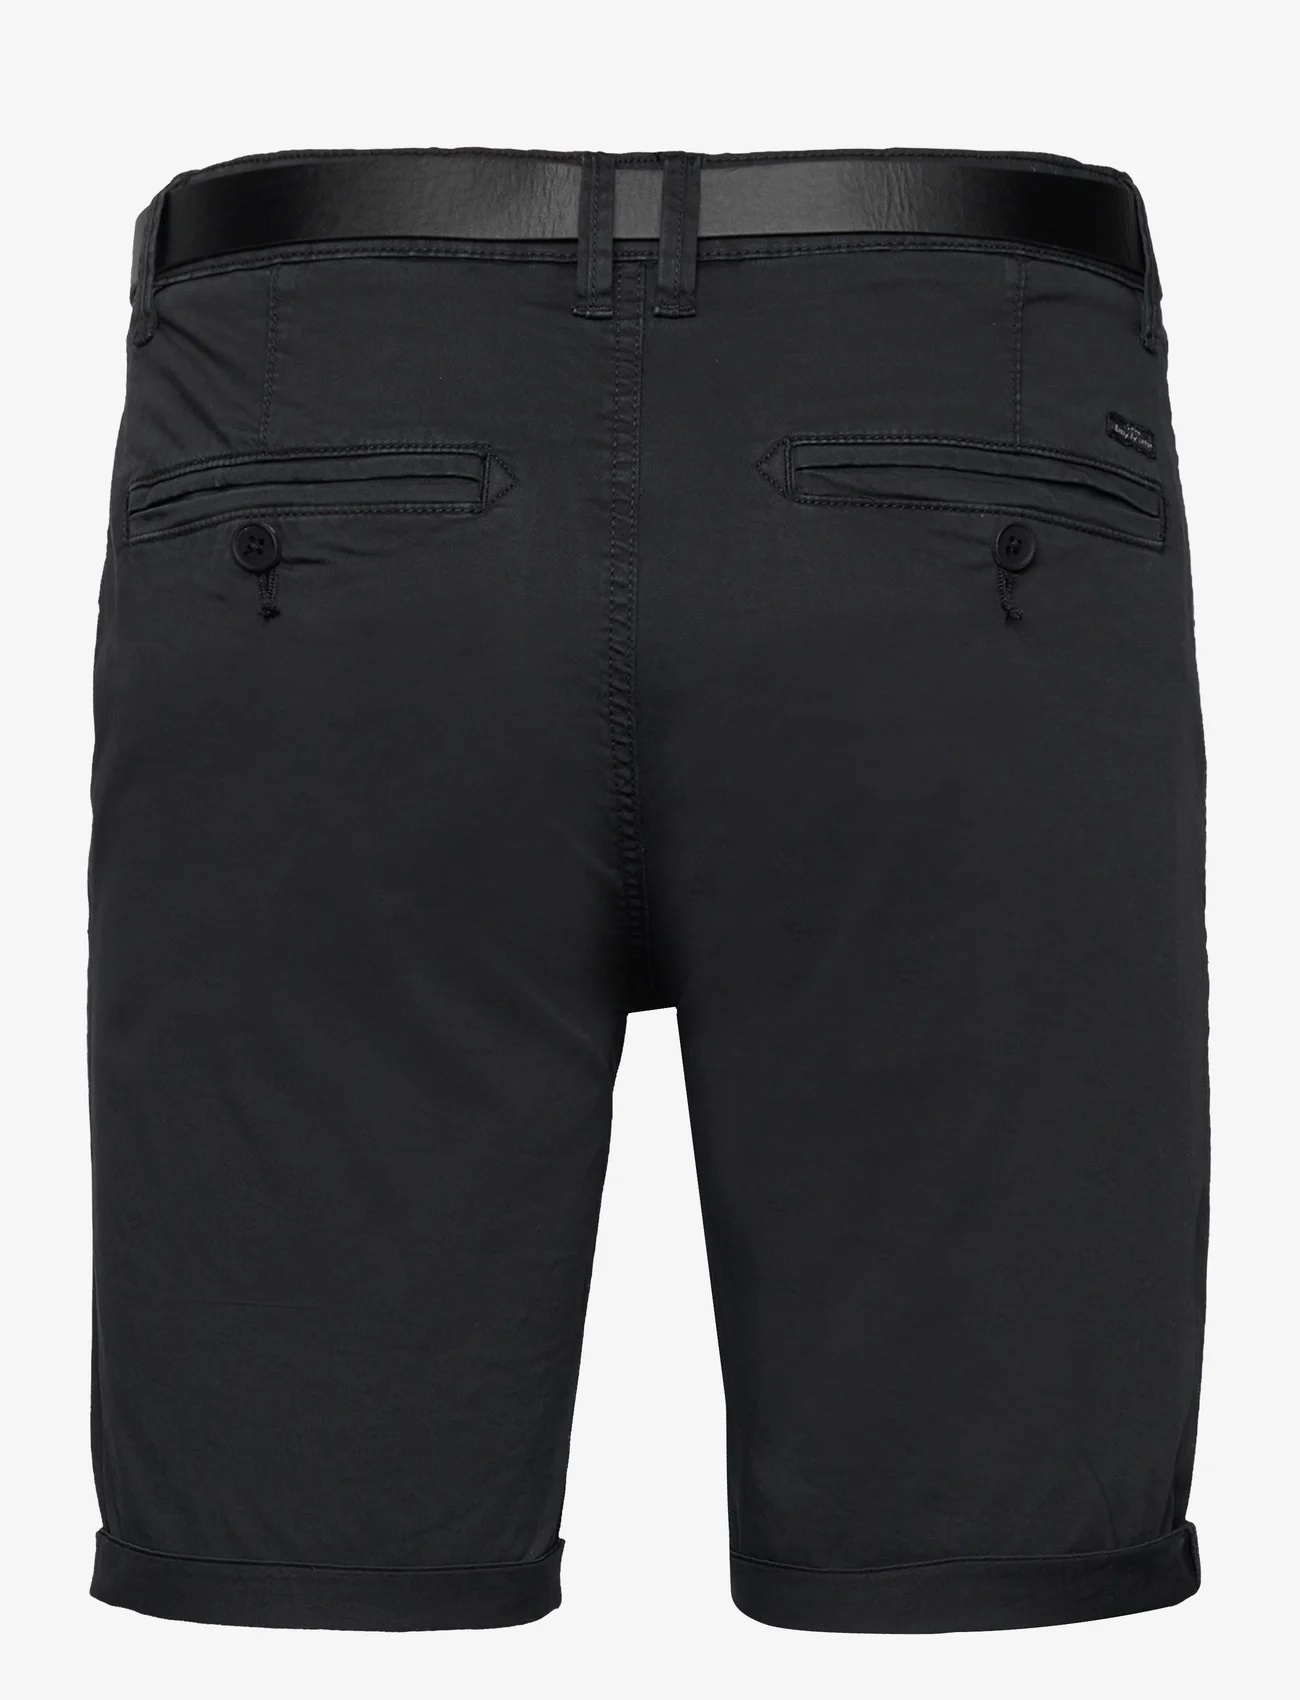 Blend - Shorts - black - 1